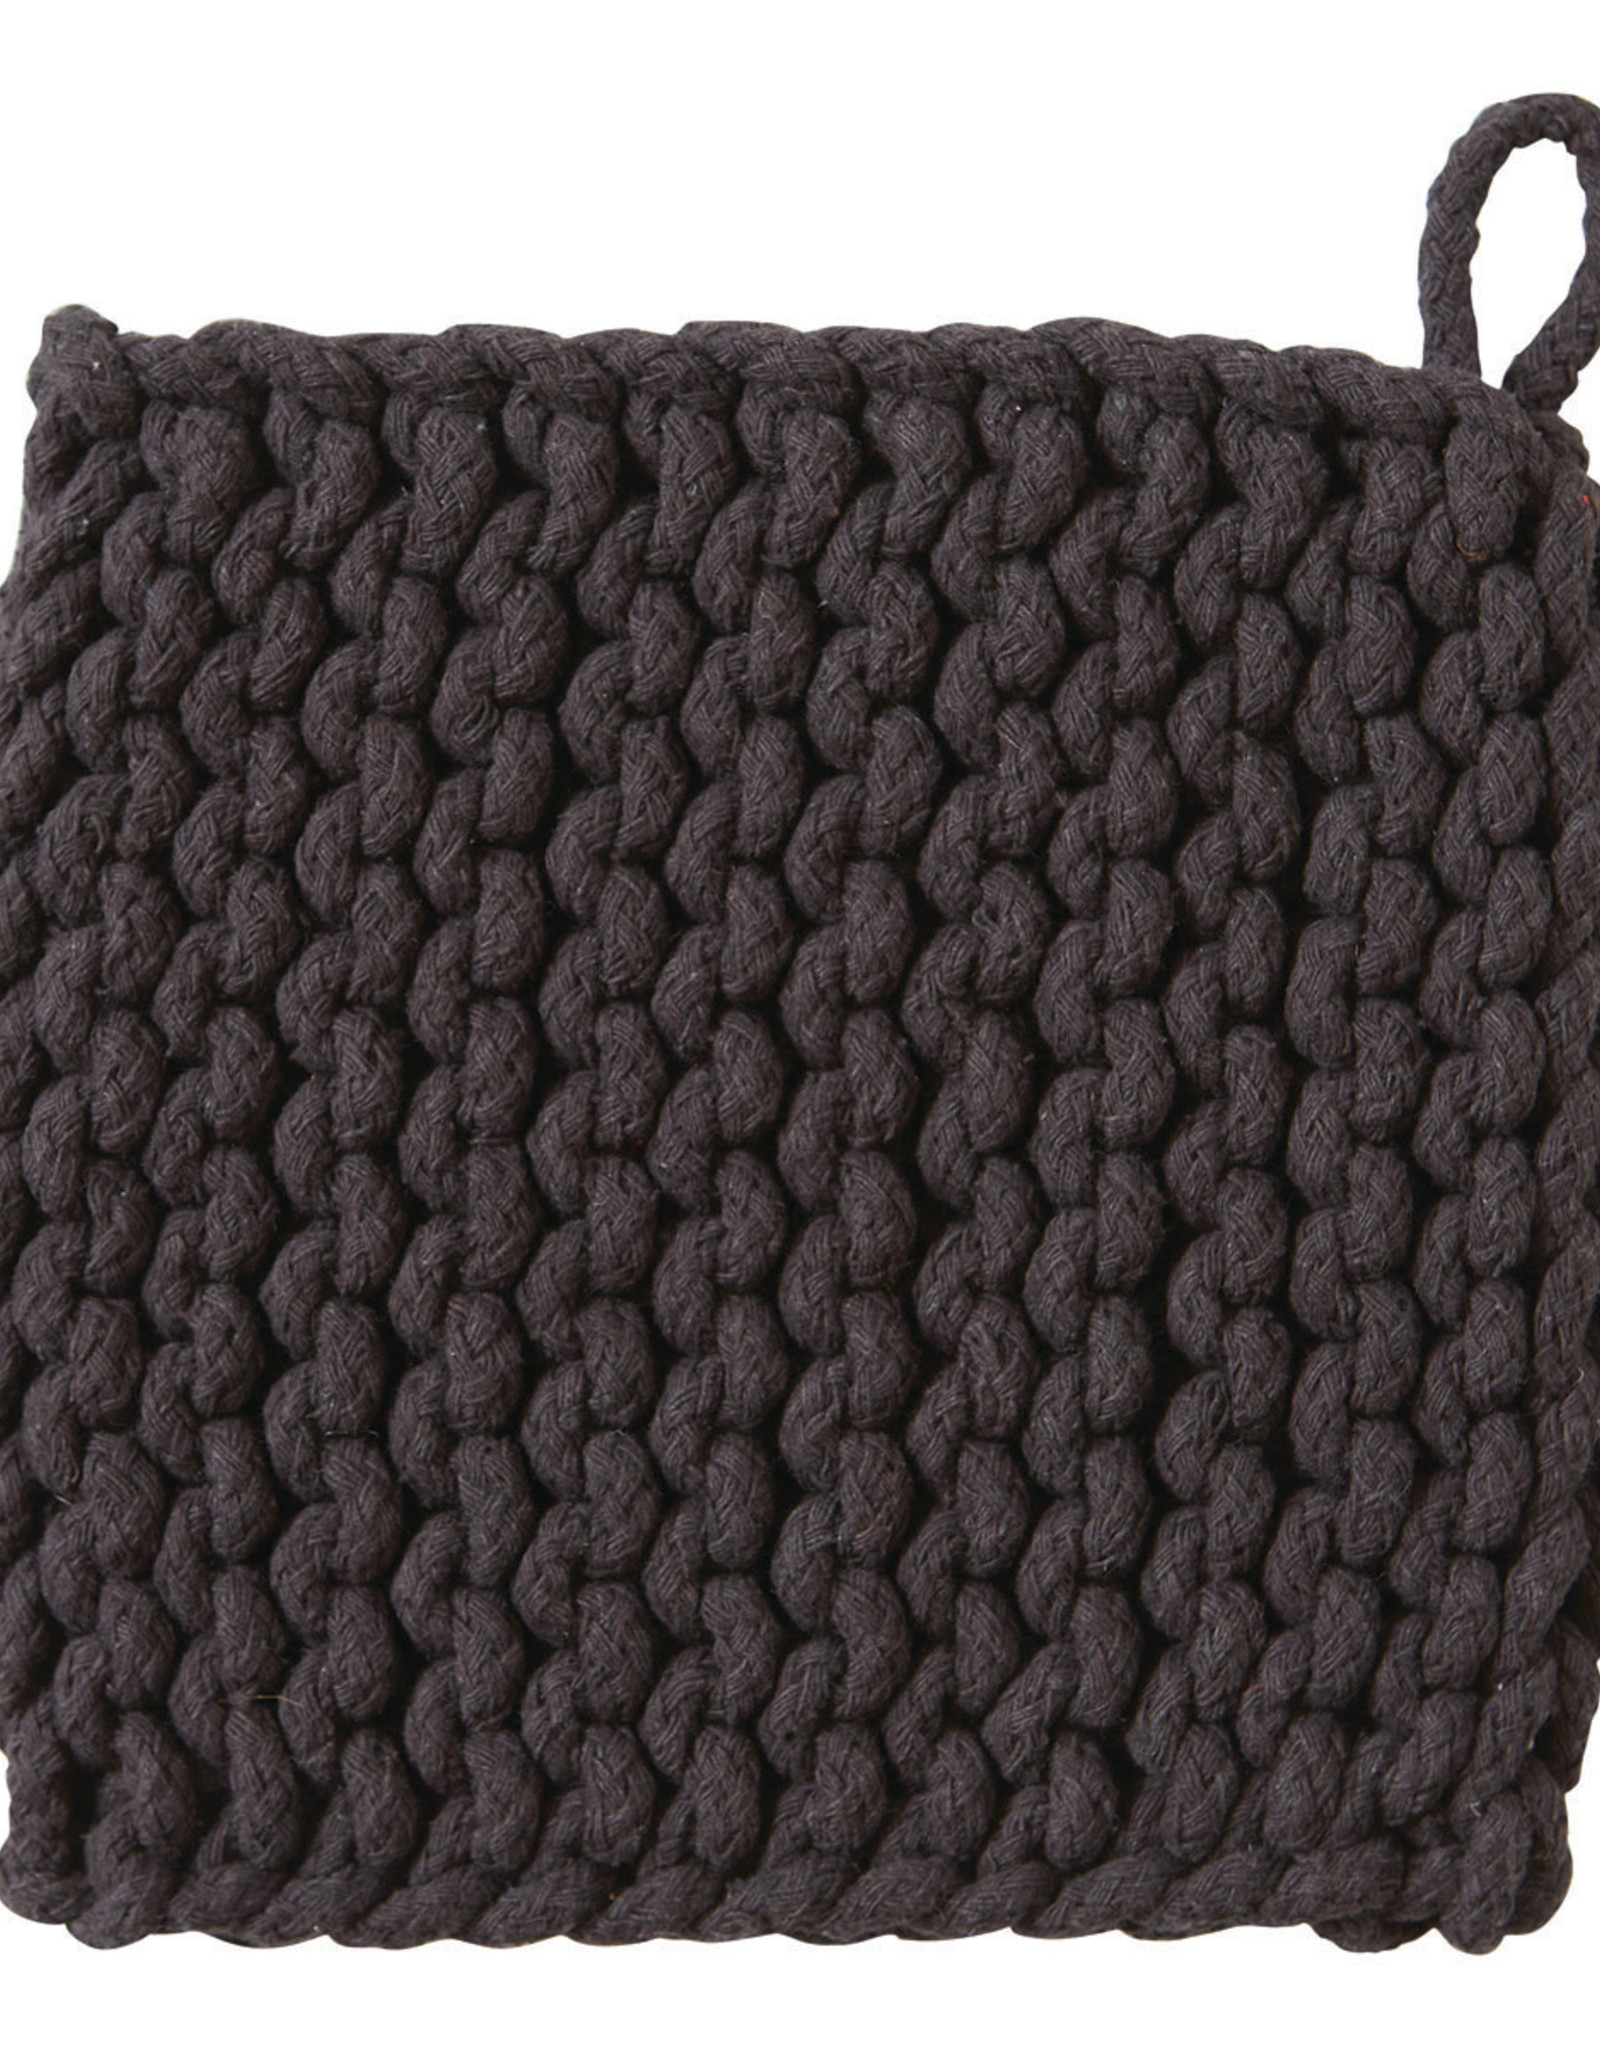 Black Pot/Pan Holder Hand Crocheted Artisan Made